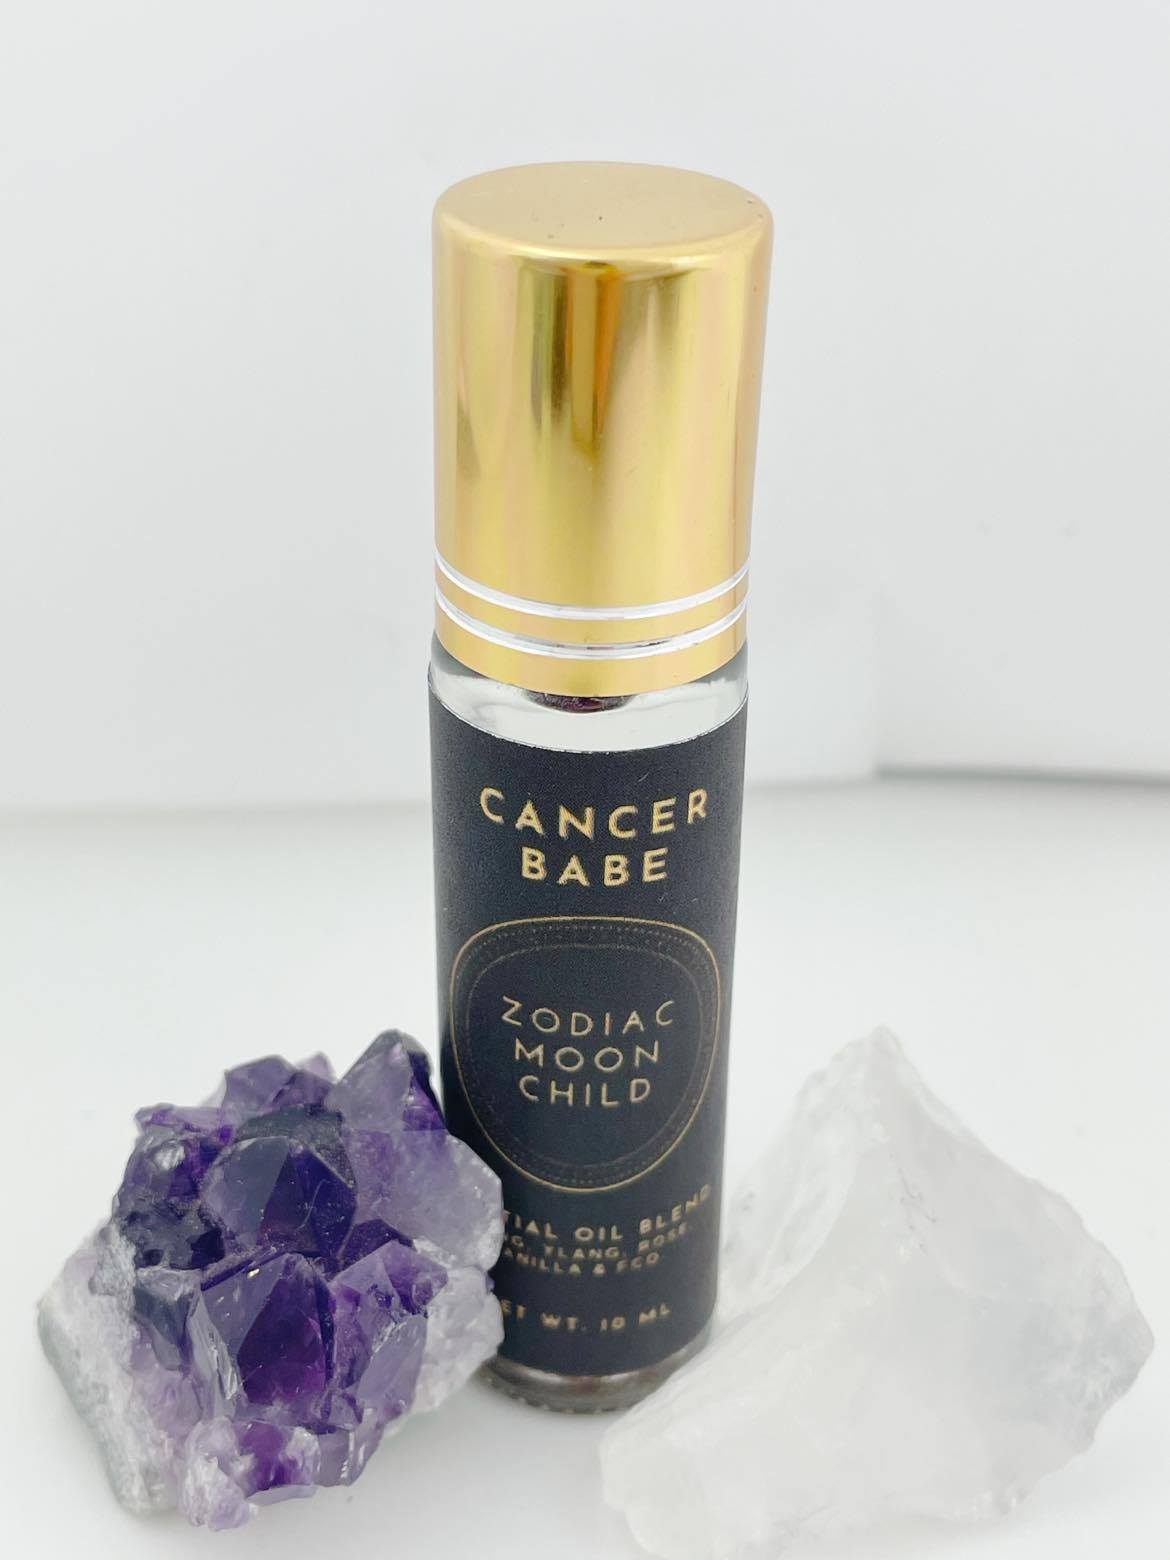 Cancer Babe Astrology Essential Oil Roller